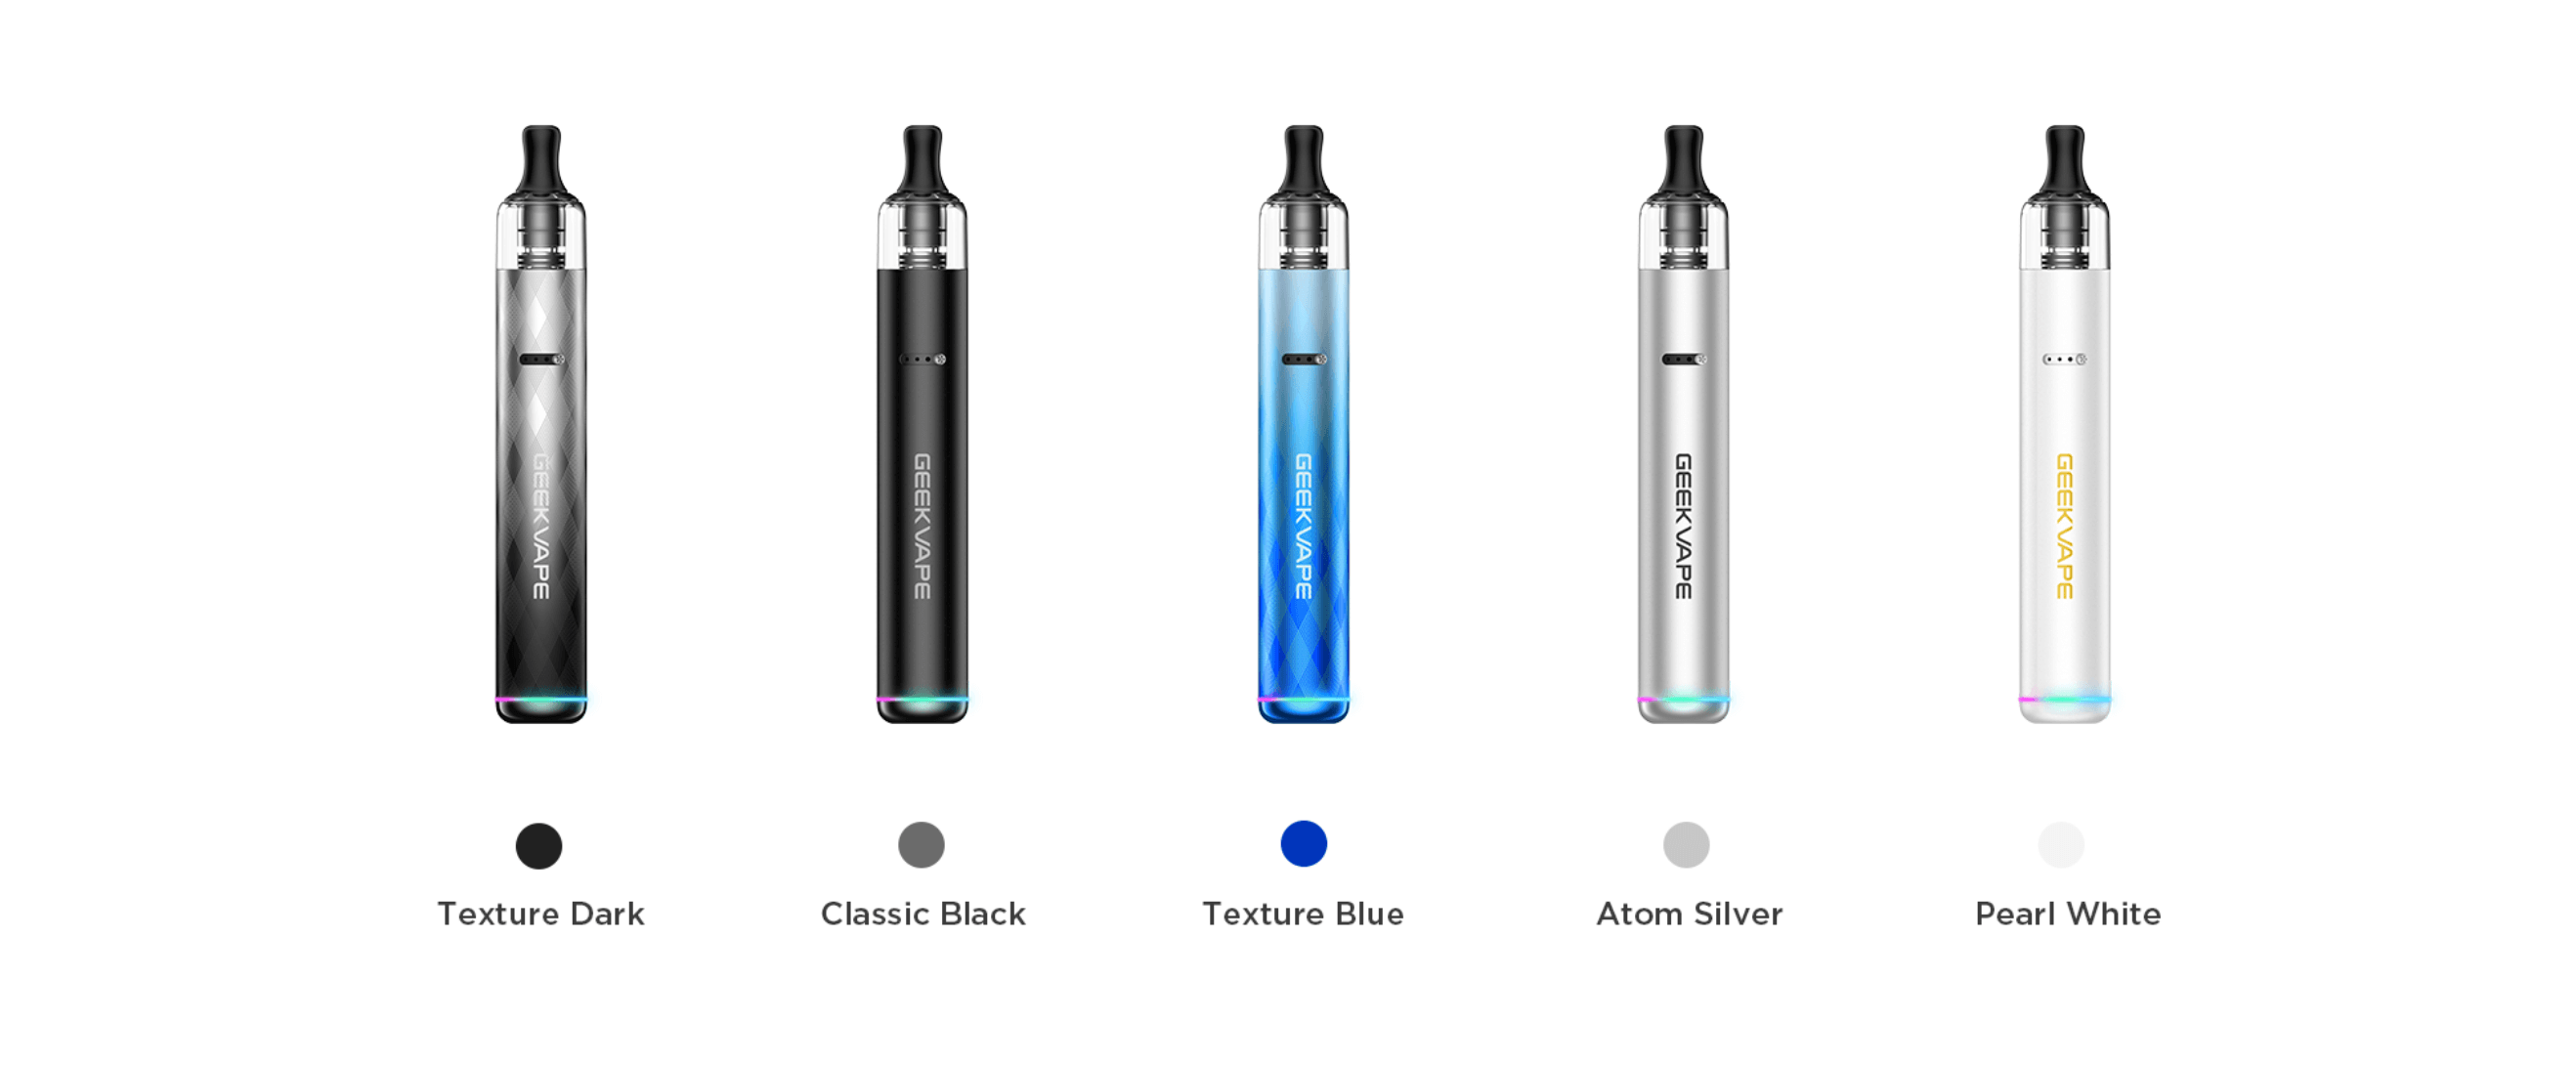 Geek Vape Wenax S3 - Colour Options - Texture Dark, Classic Black, Texture Blue, Aton Silver, Pearl White